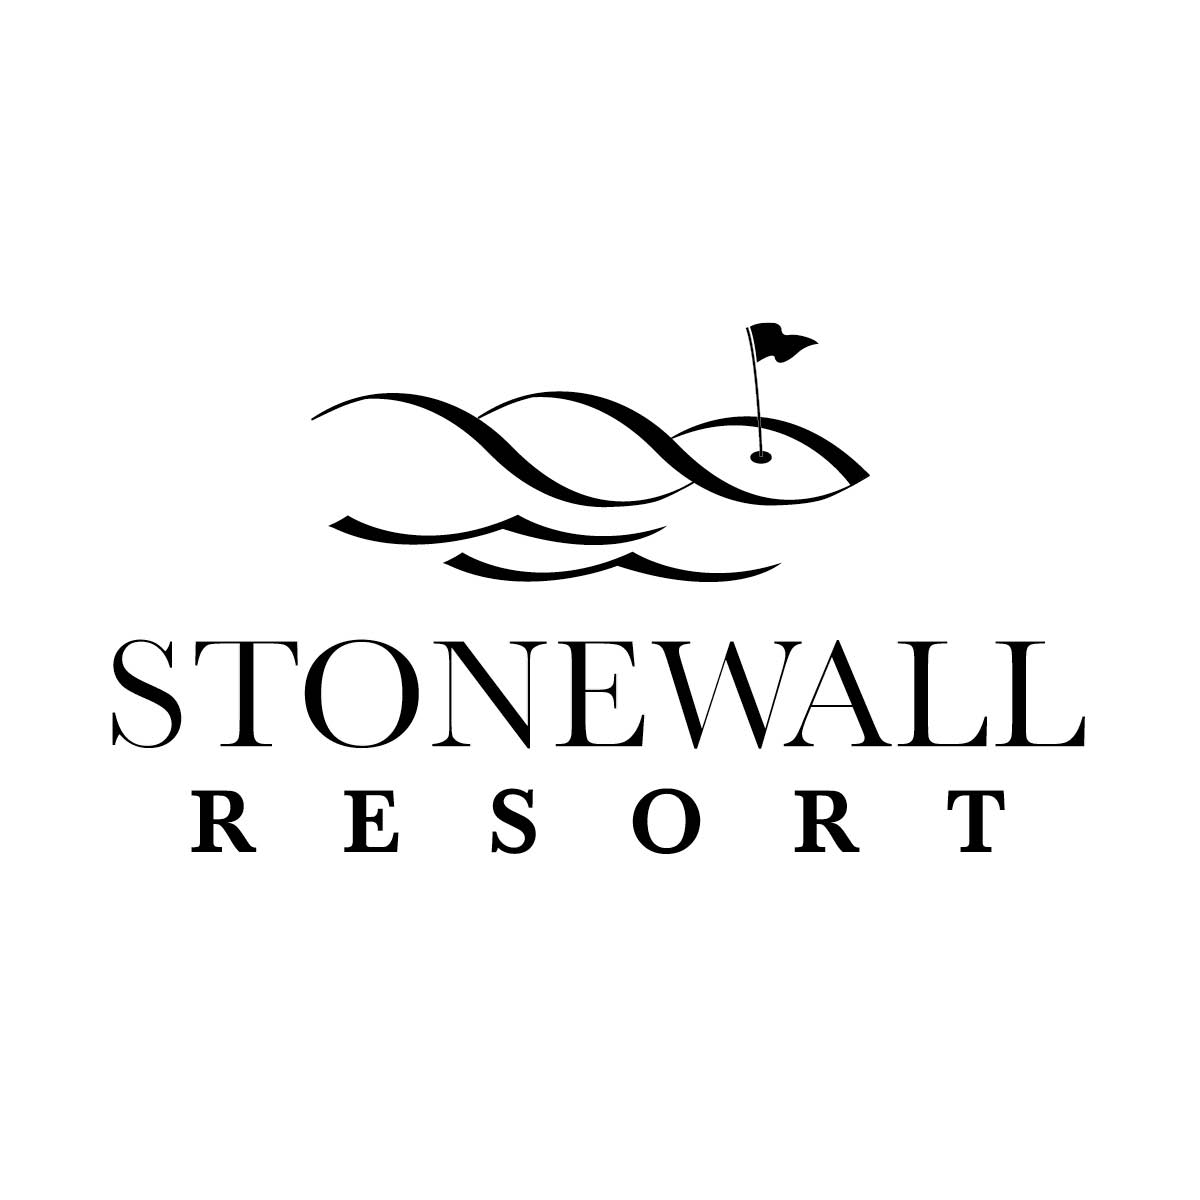 Stonewall Resort